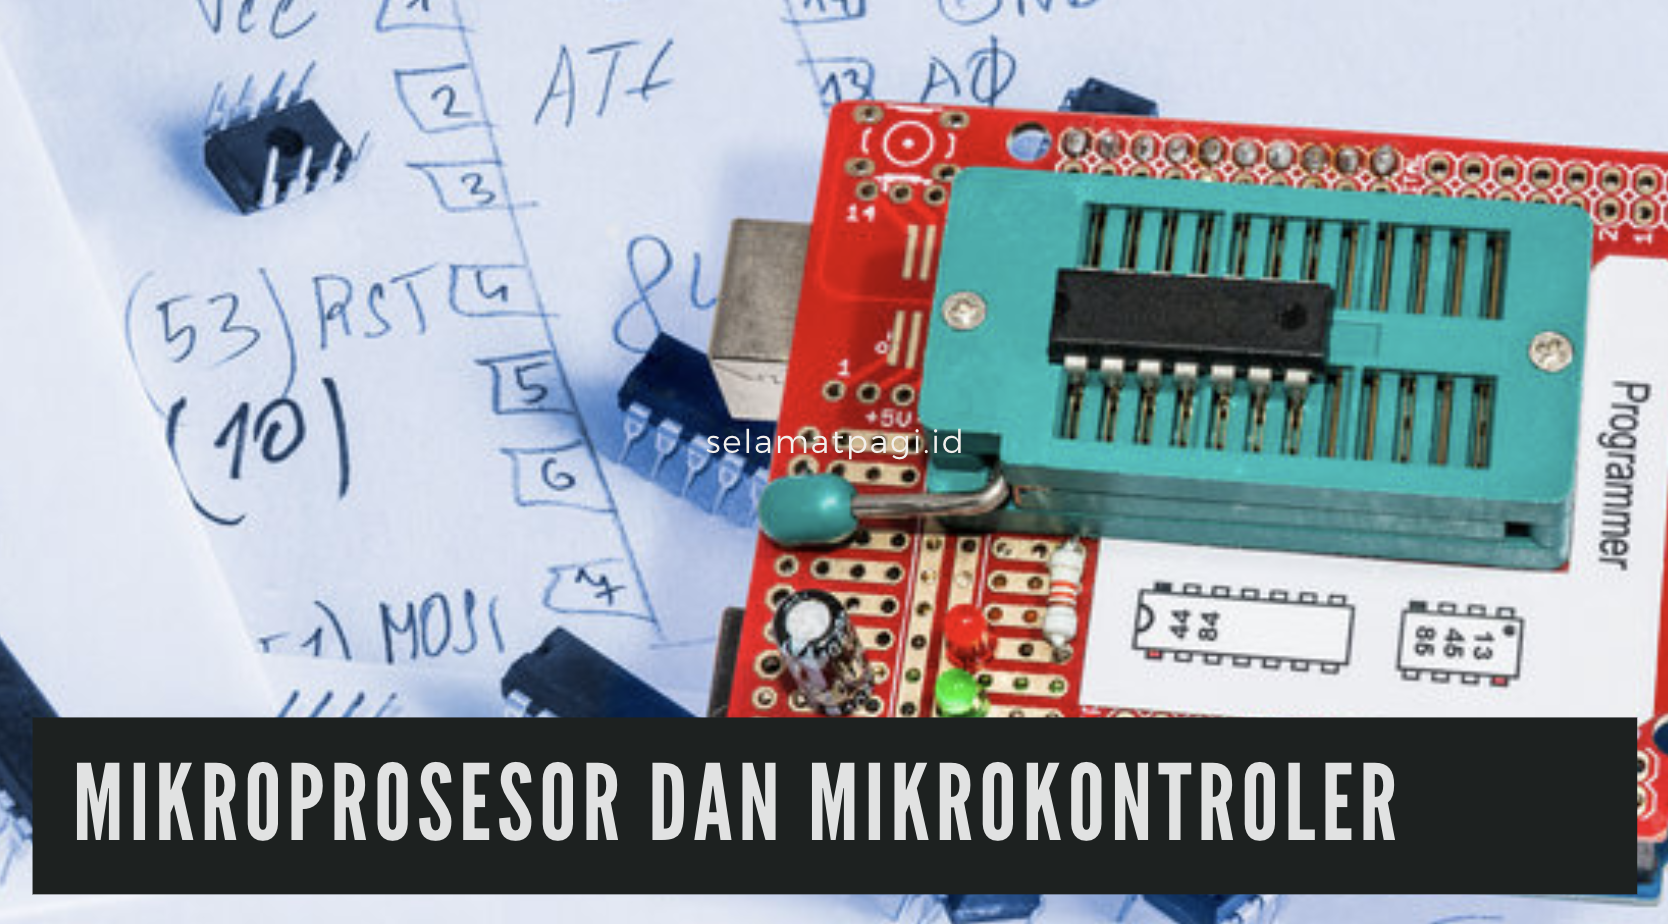 Perbedaan Mikroprosesor dan Mikrokontroler